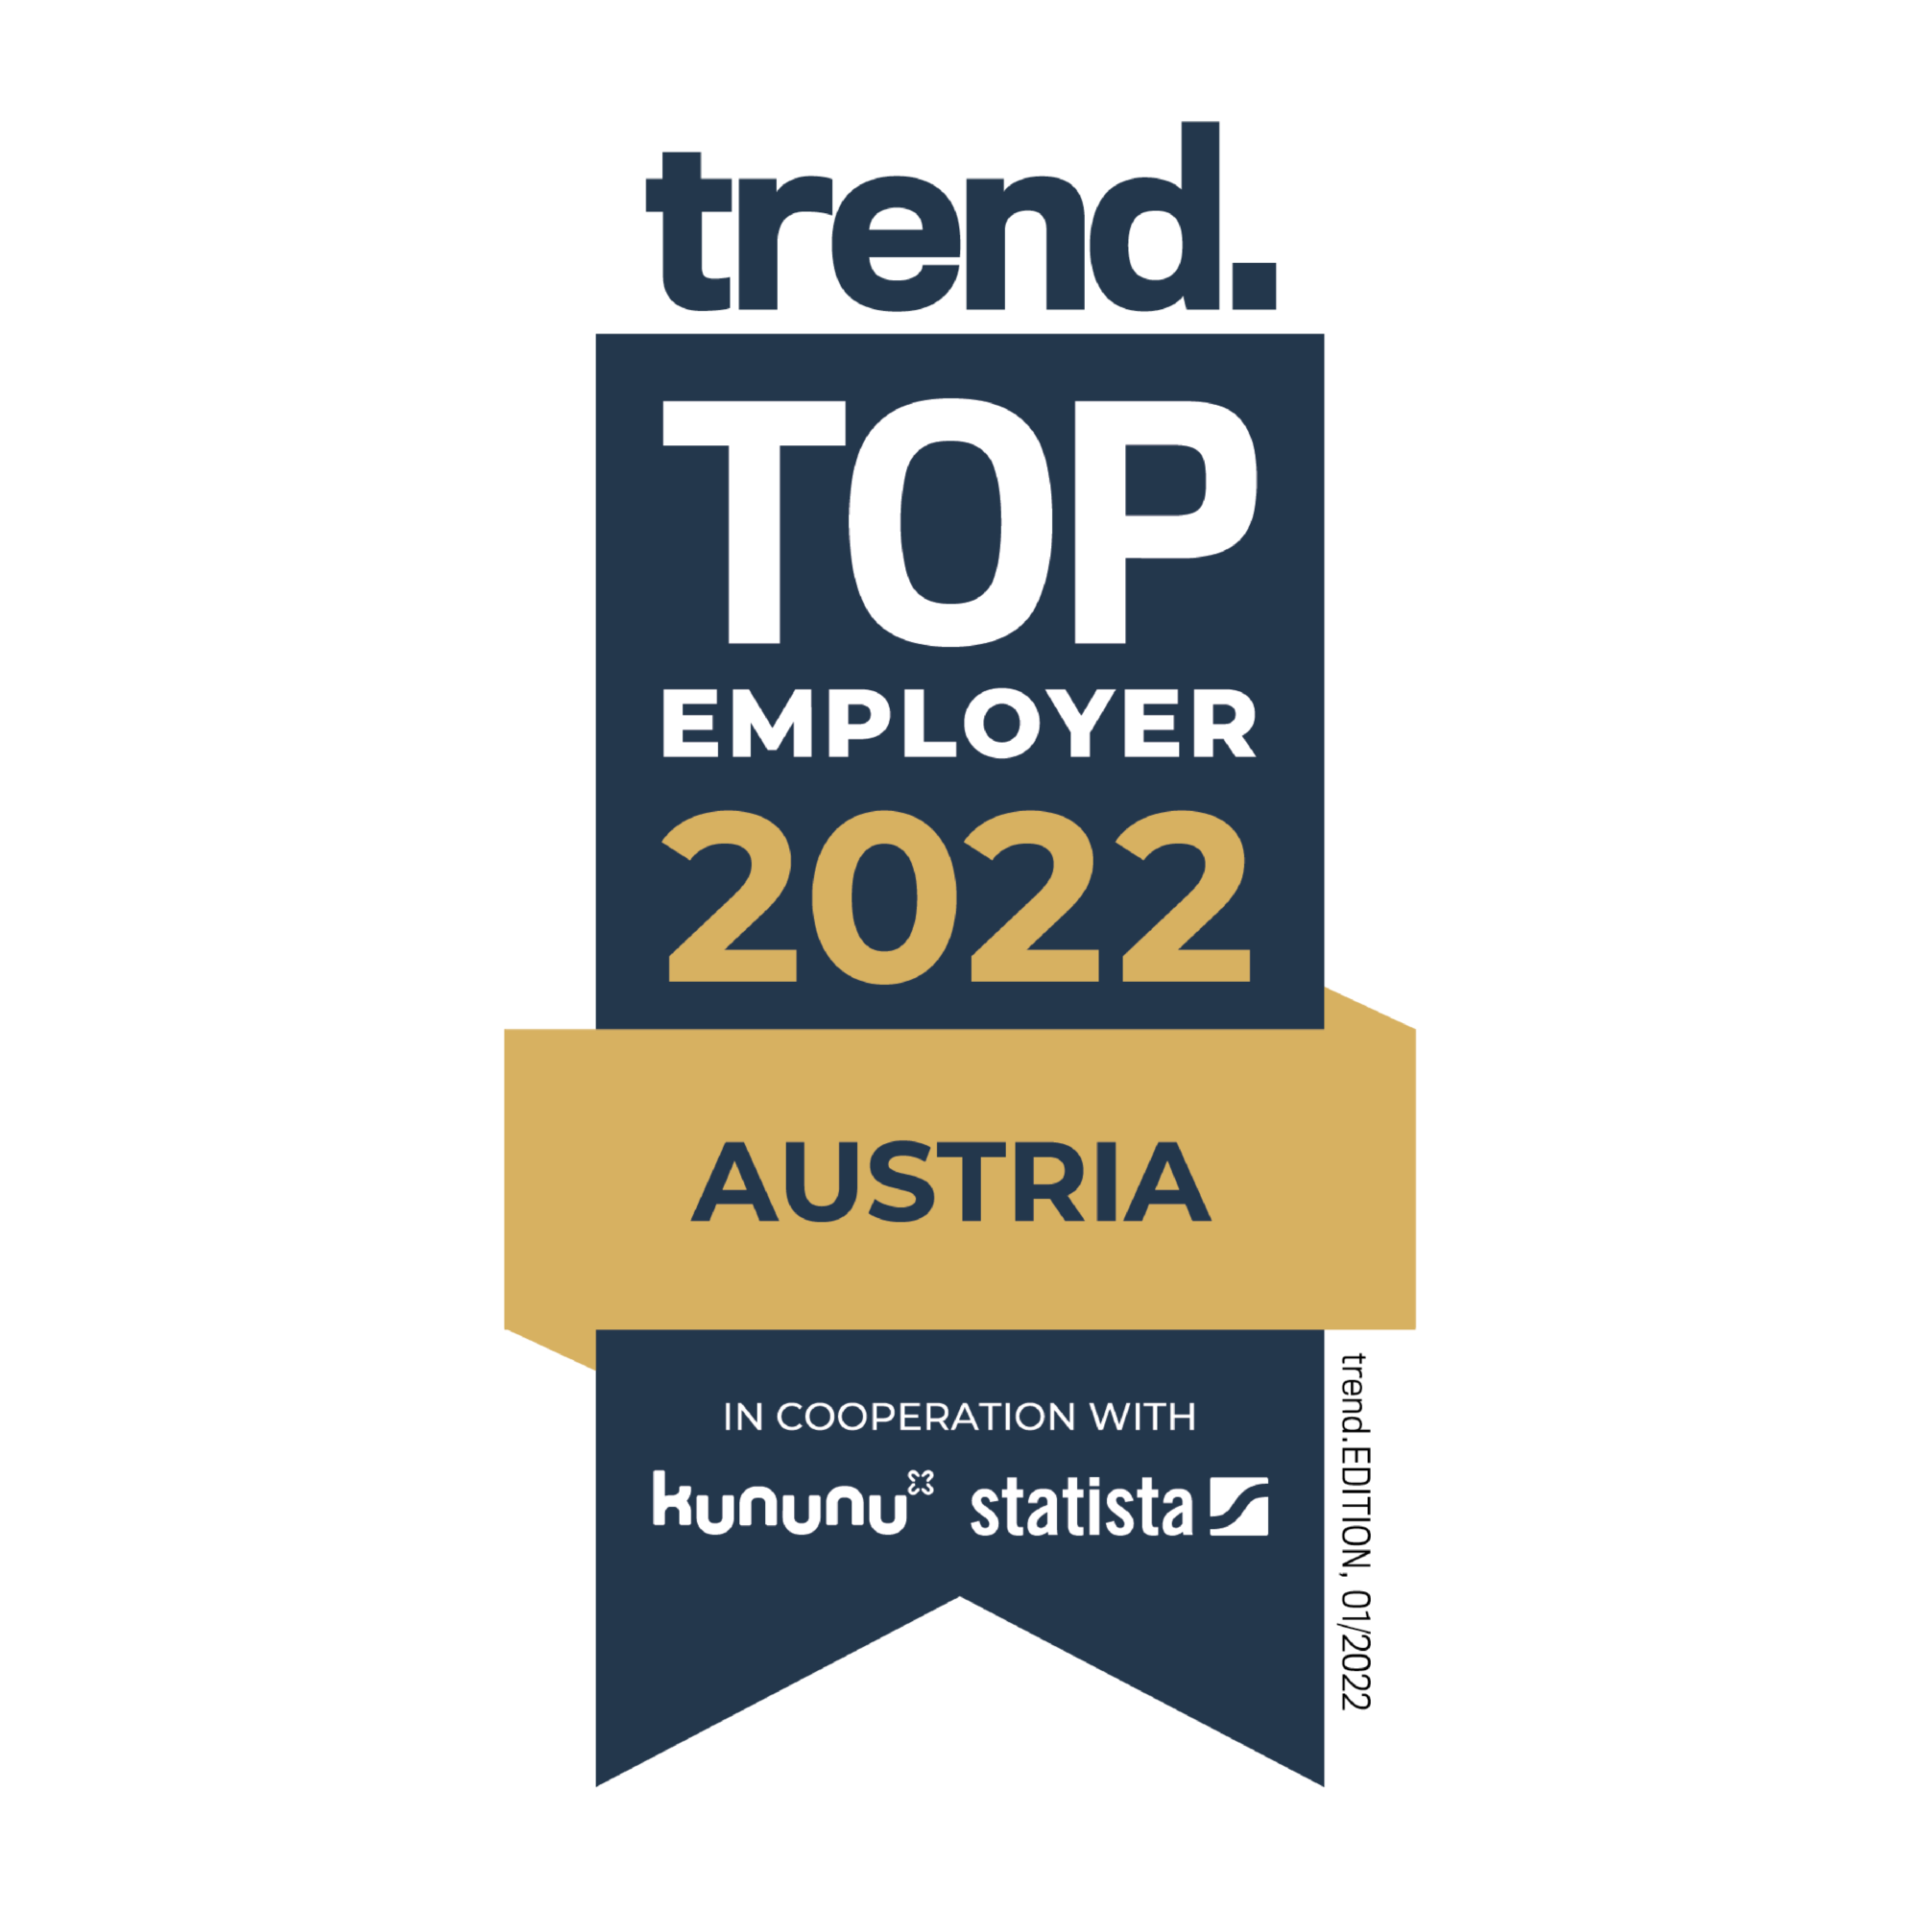 Top employer 2022 - Austria